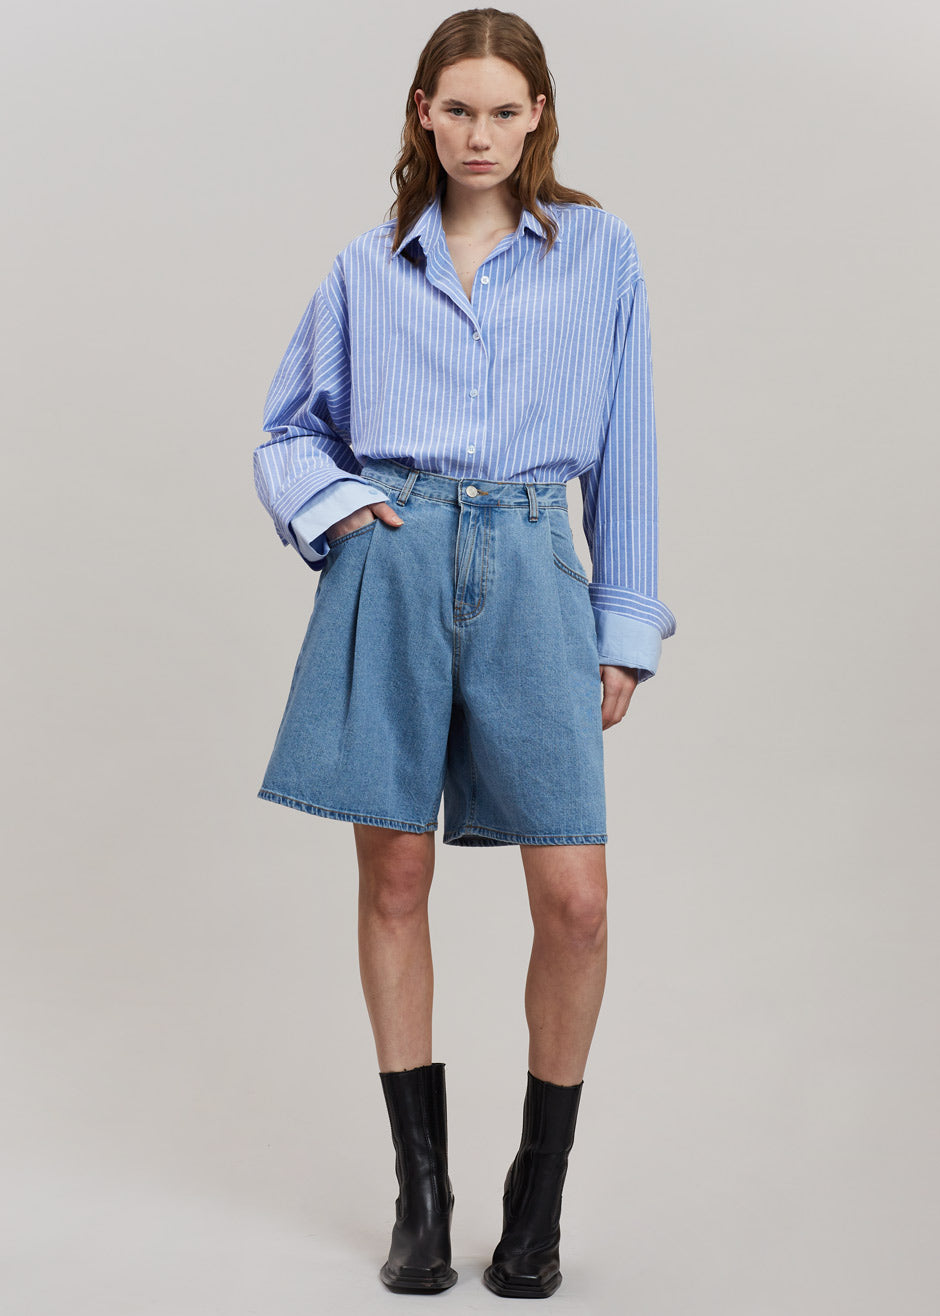 Christa Striped Shirt - Blue - 5